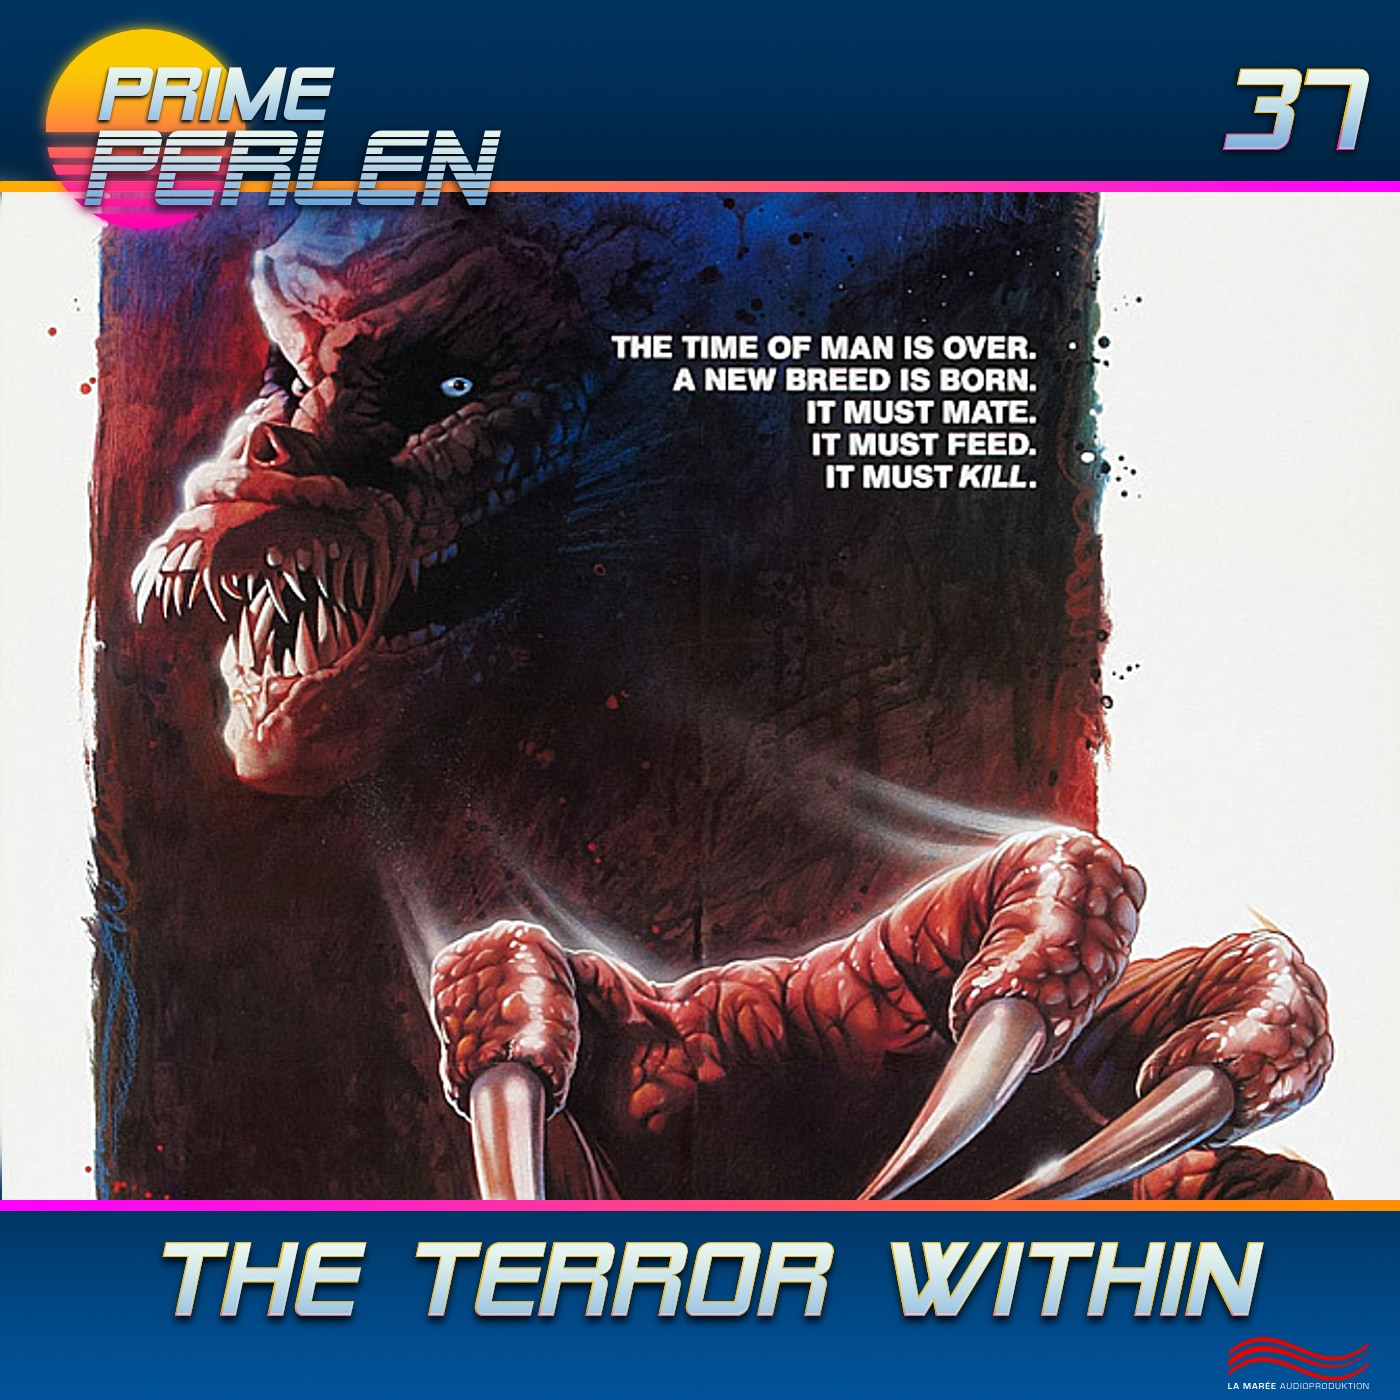 Prime Perlen #37 – The Terror Within